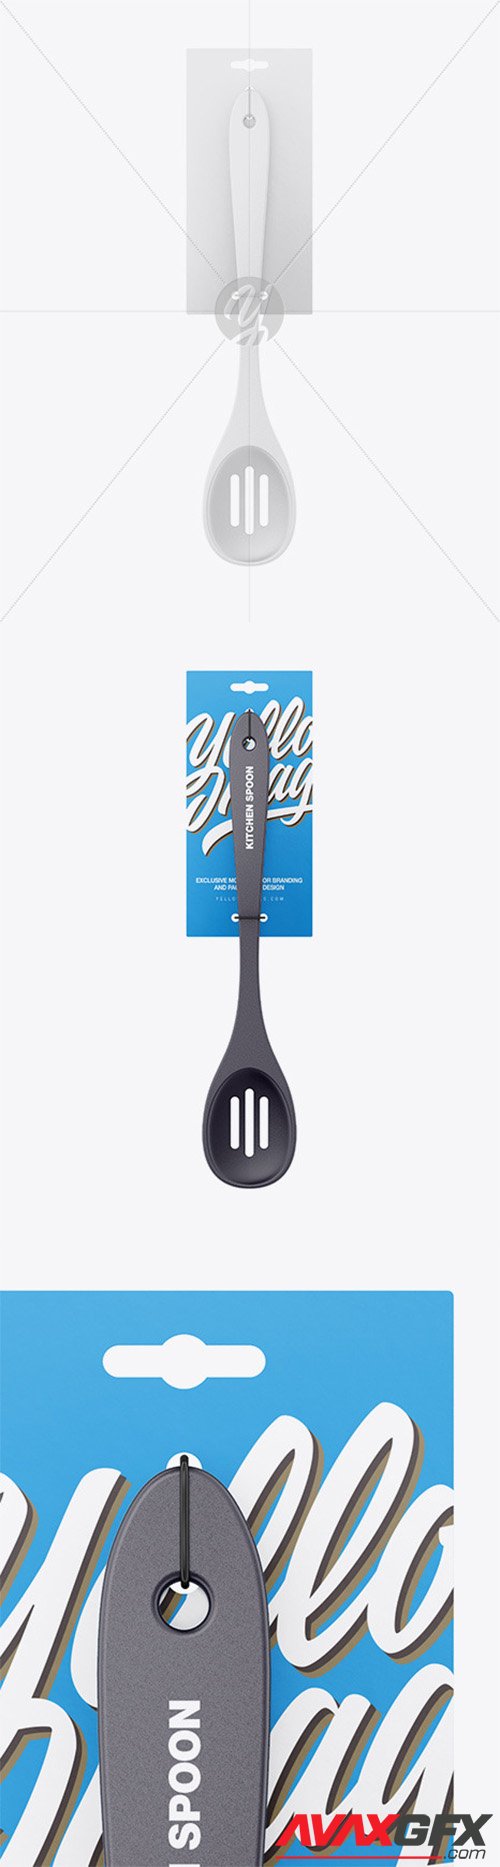 Plastic Kitchen Slotted Spoon Mockup 61248